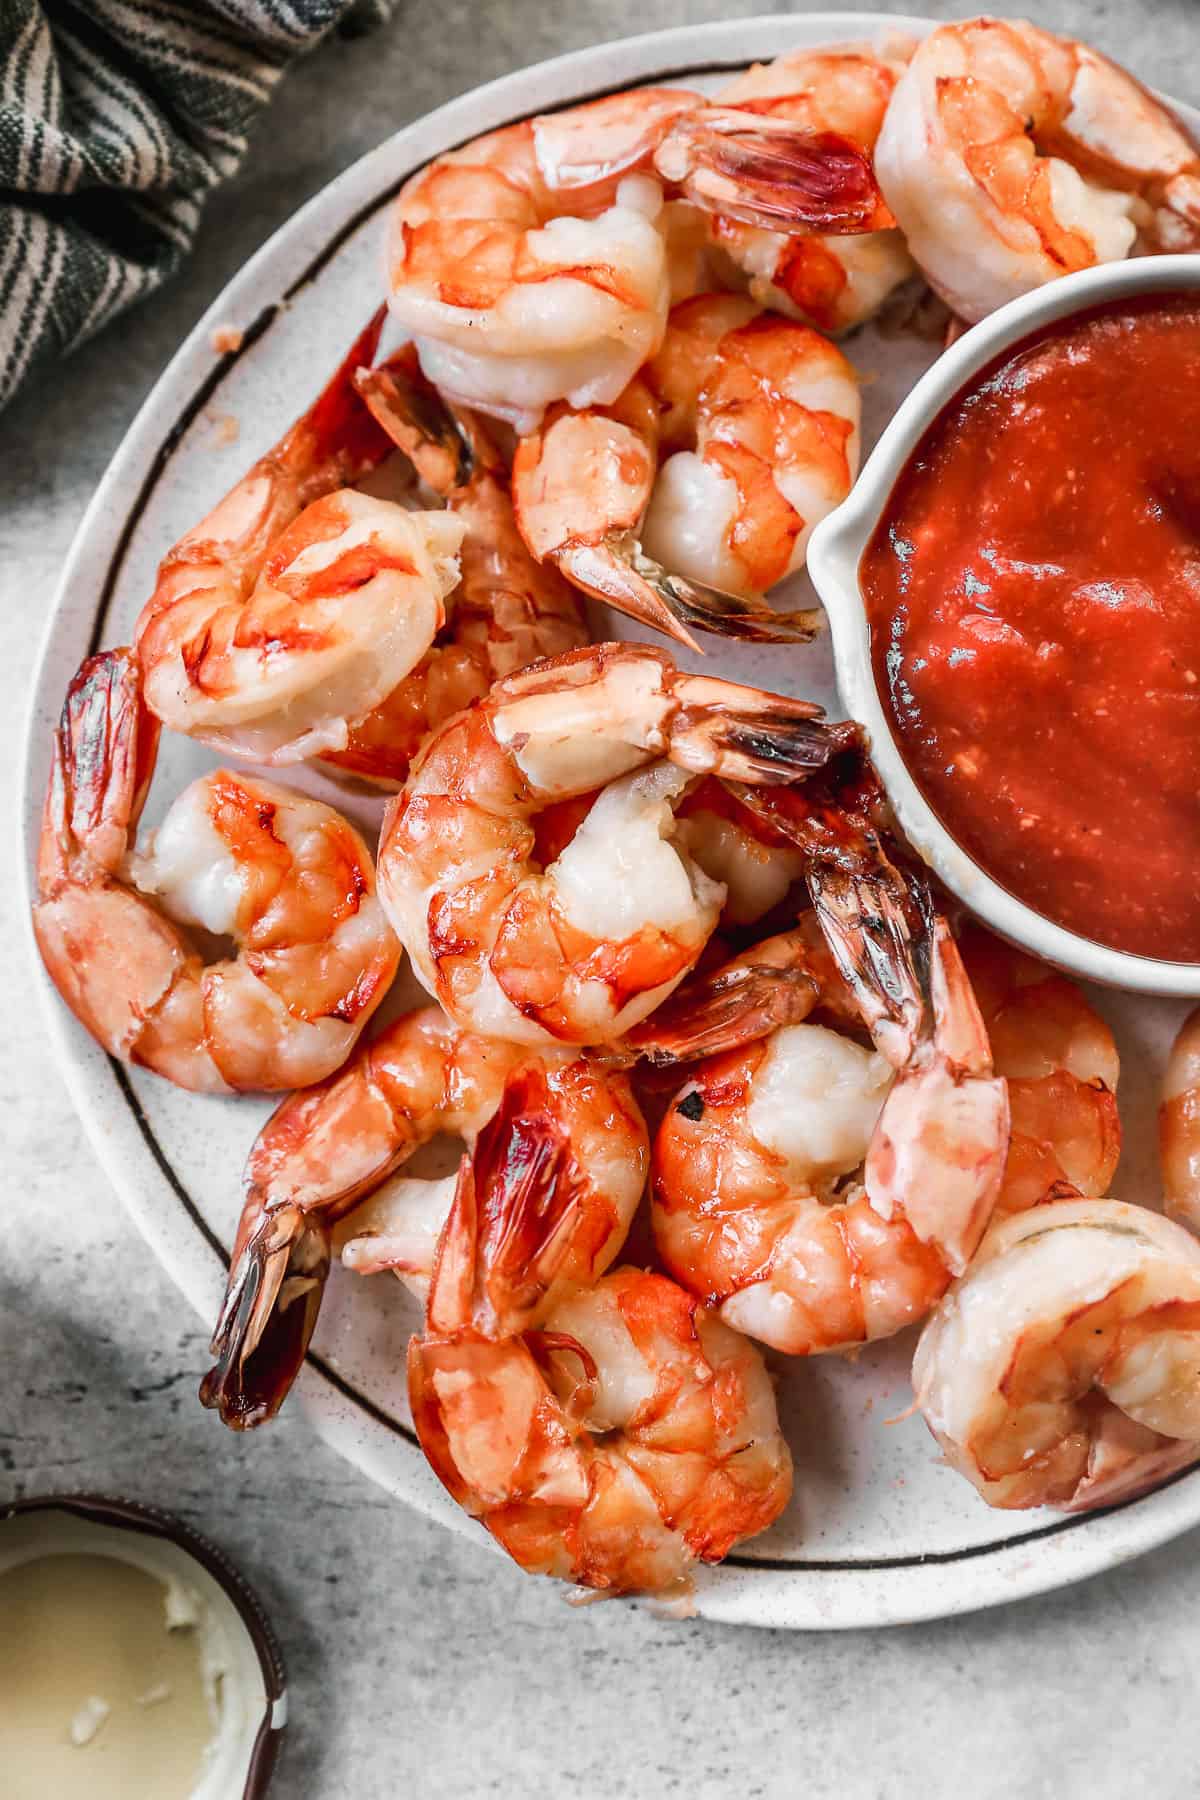 Deep South Dish: Jumbo Shrimp with Homemade Cocktail Sauce